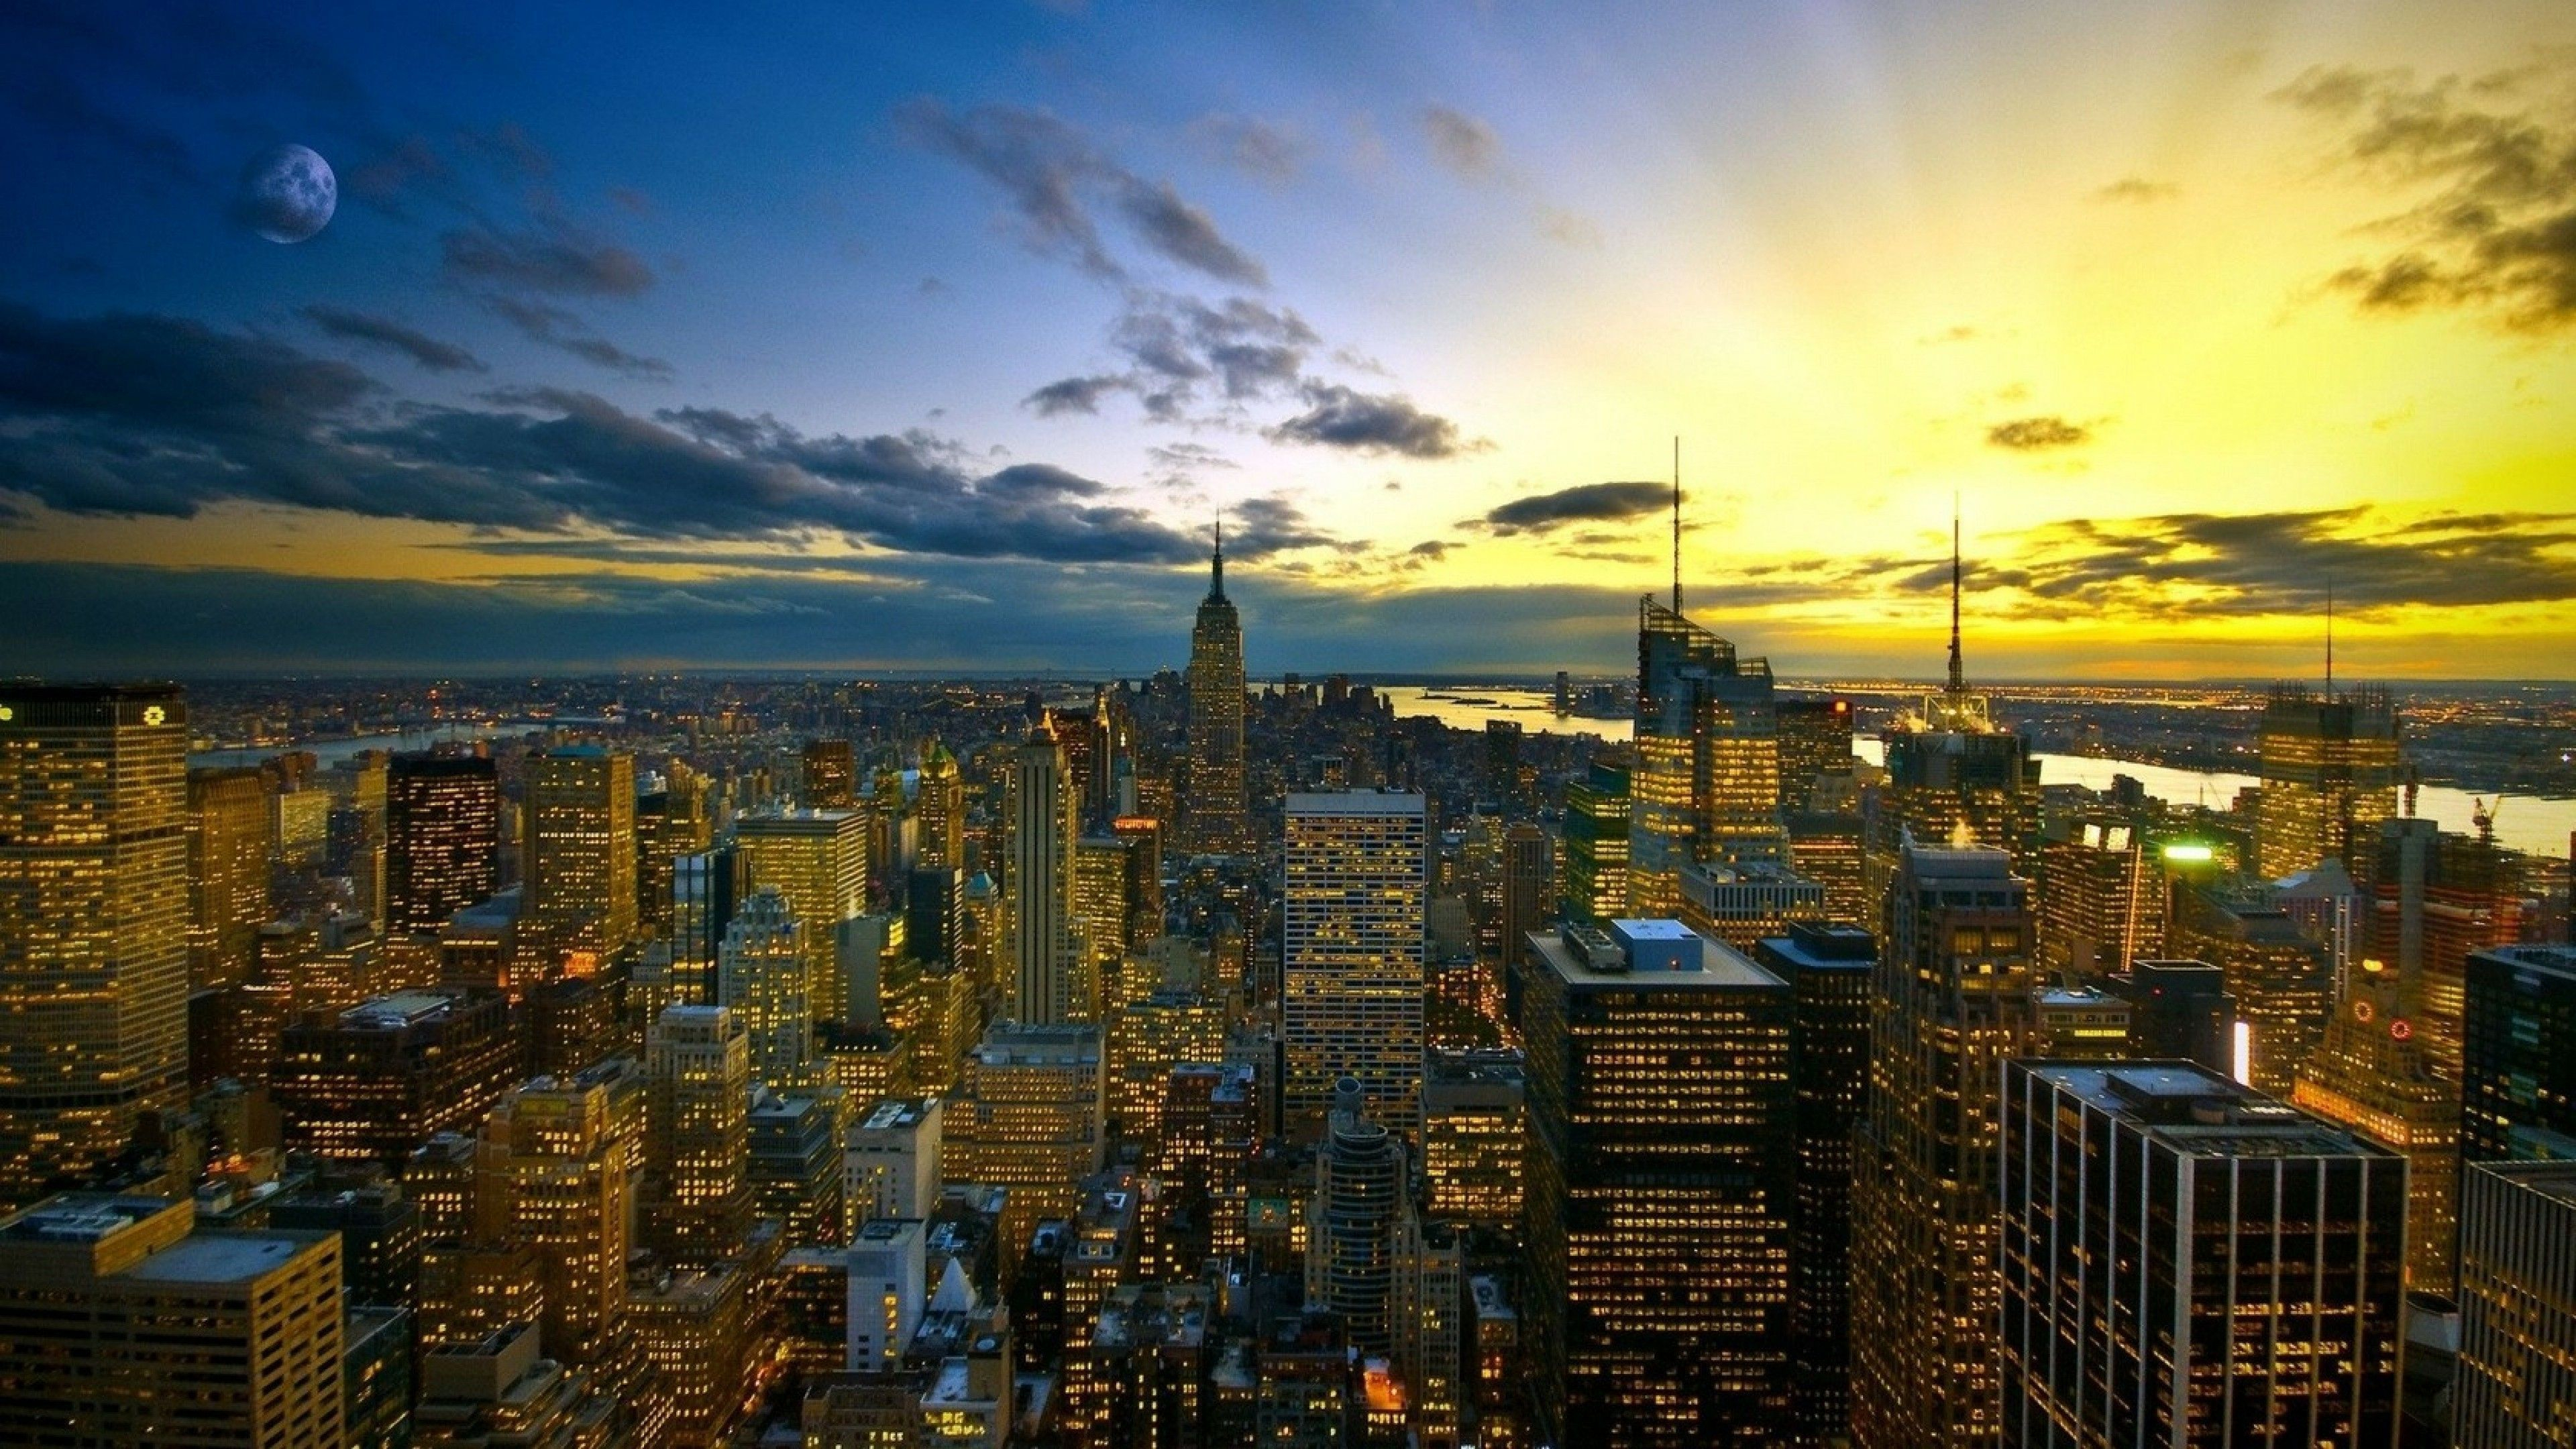 3840x2160 8K Ultra HD City Wallpapers Top Free 8K Ultra HD City Backgrounds | Sunset city, City wallpaper, New york skyline